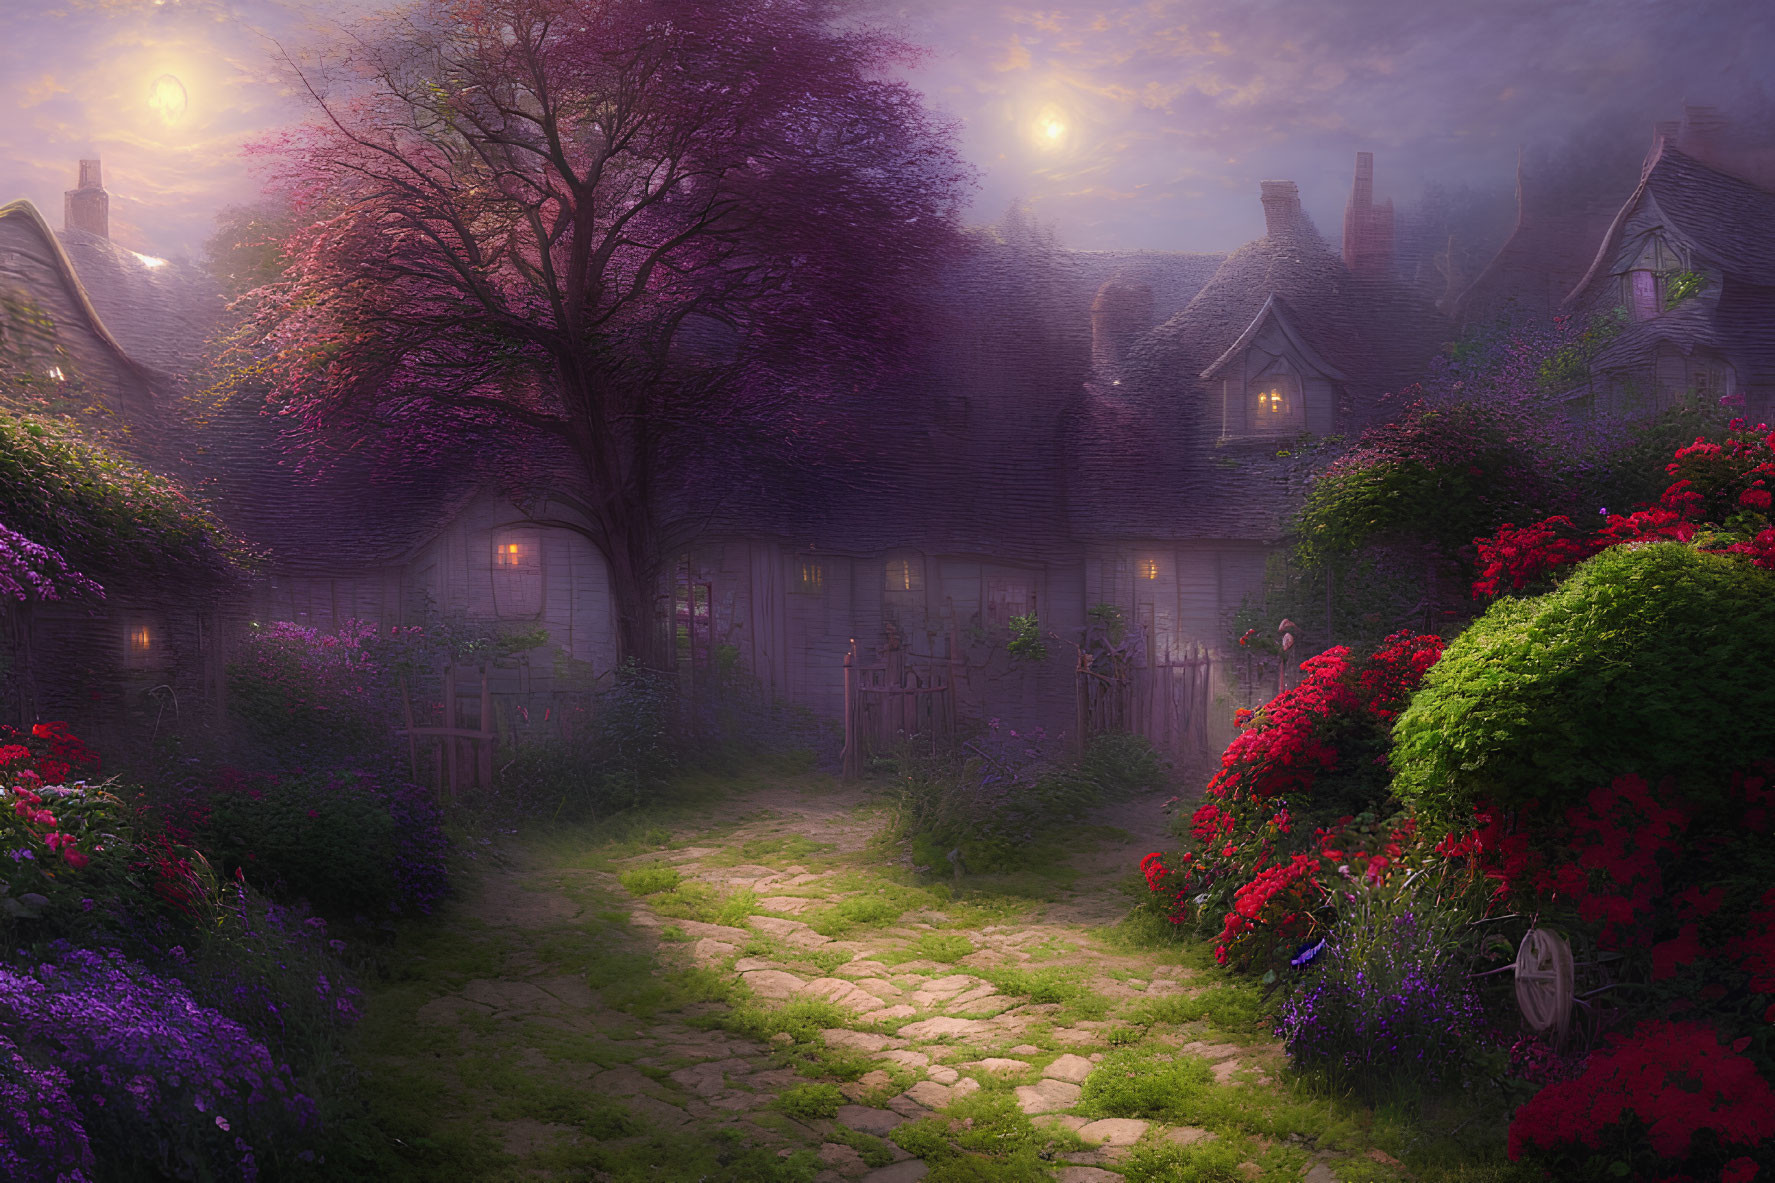 Fairytale village at twilight: cobblestone path, blooming flowers, quaint cottages,